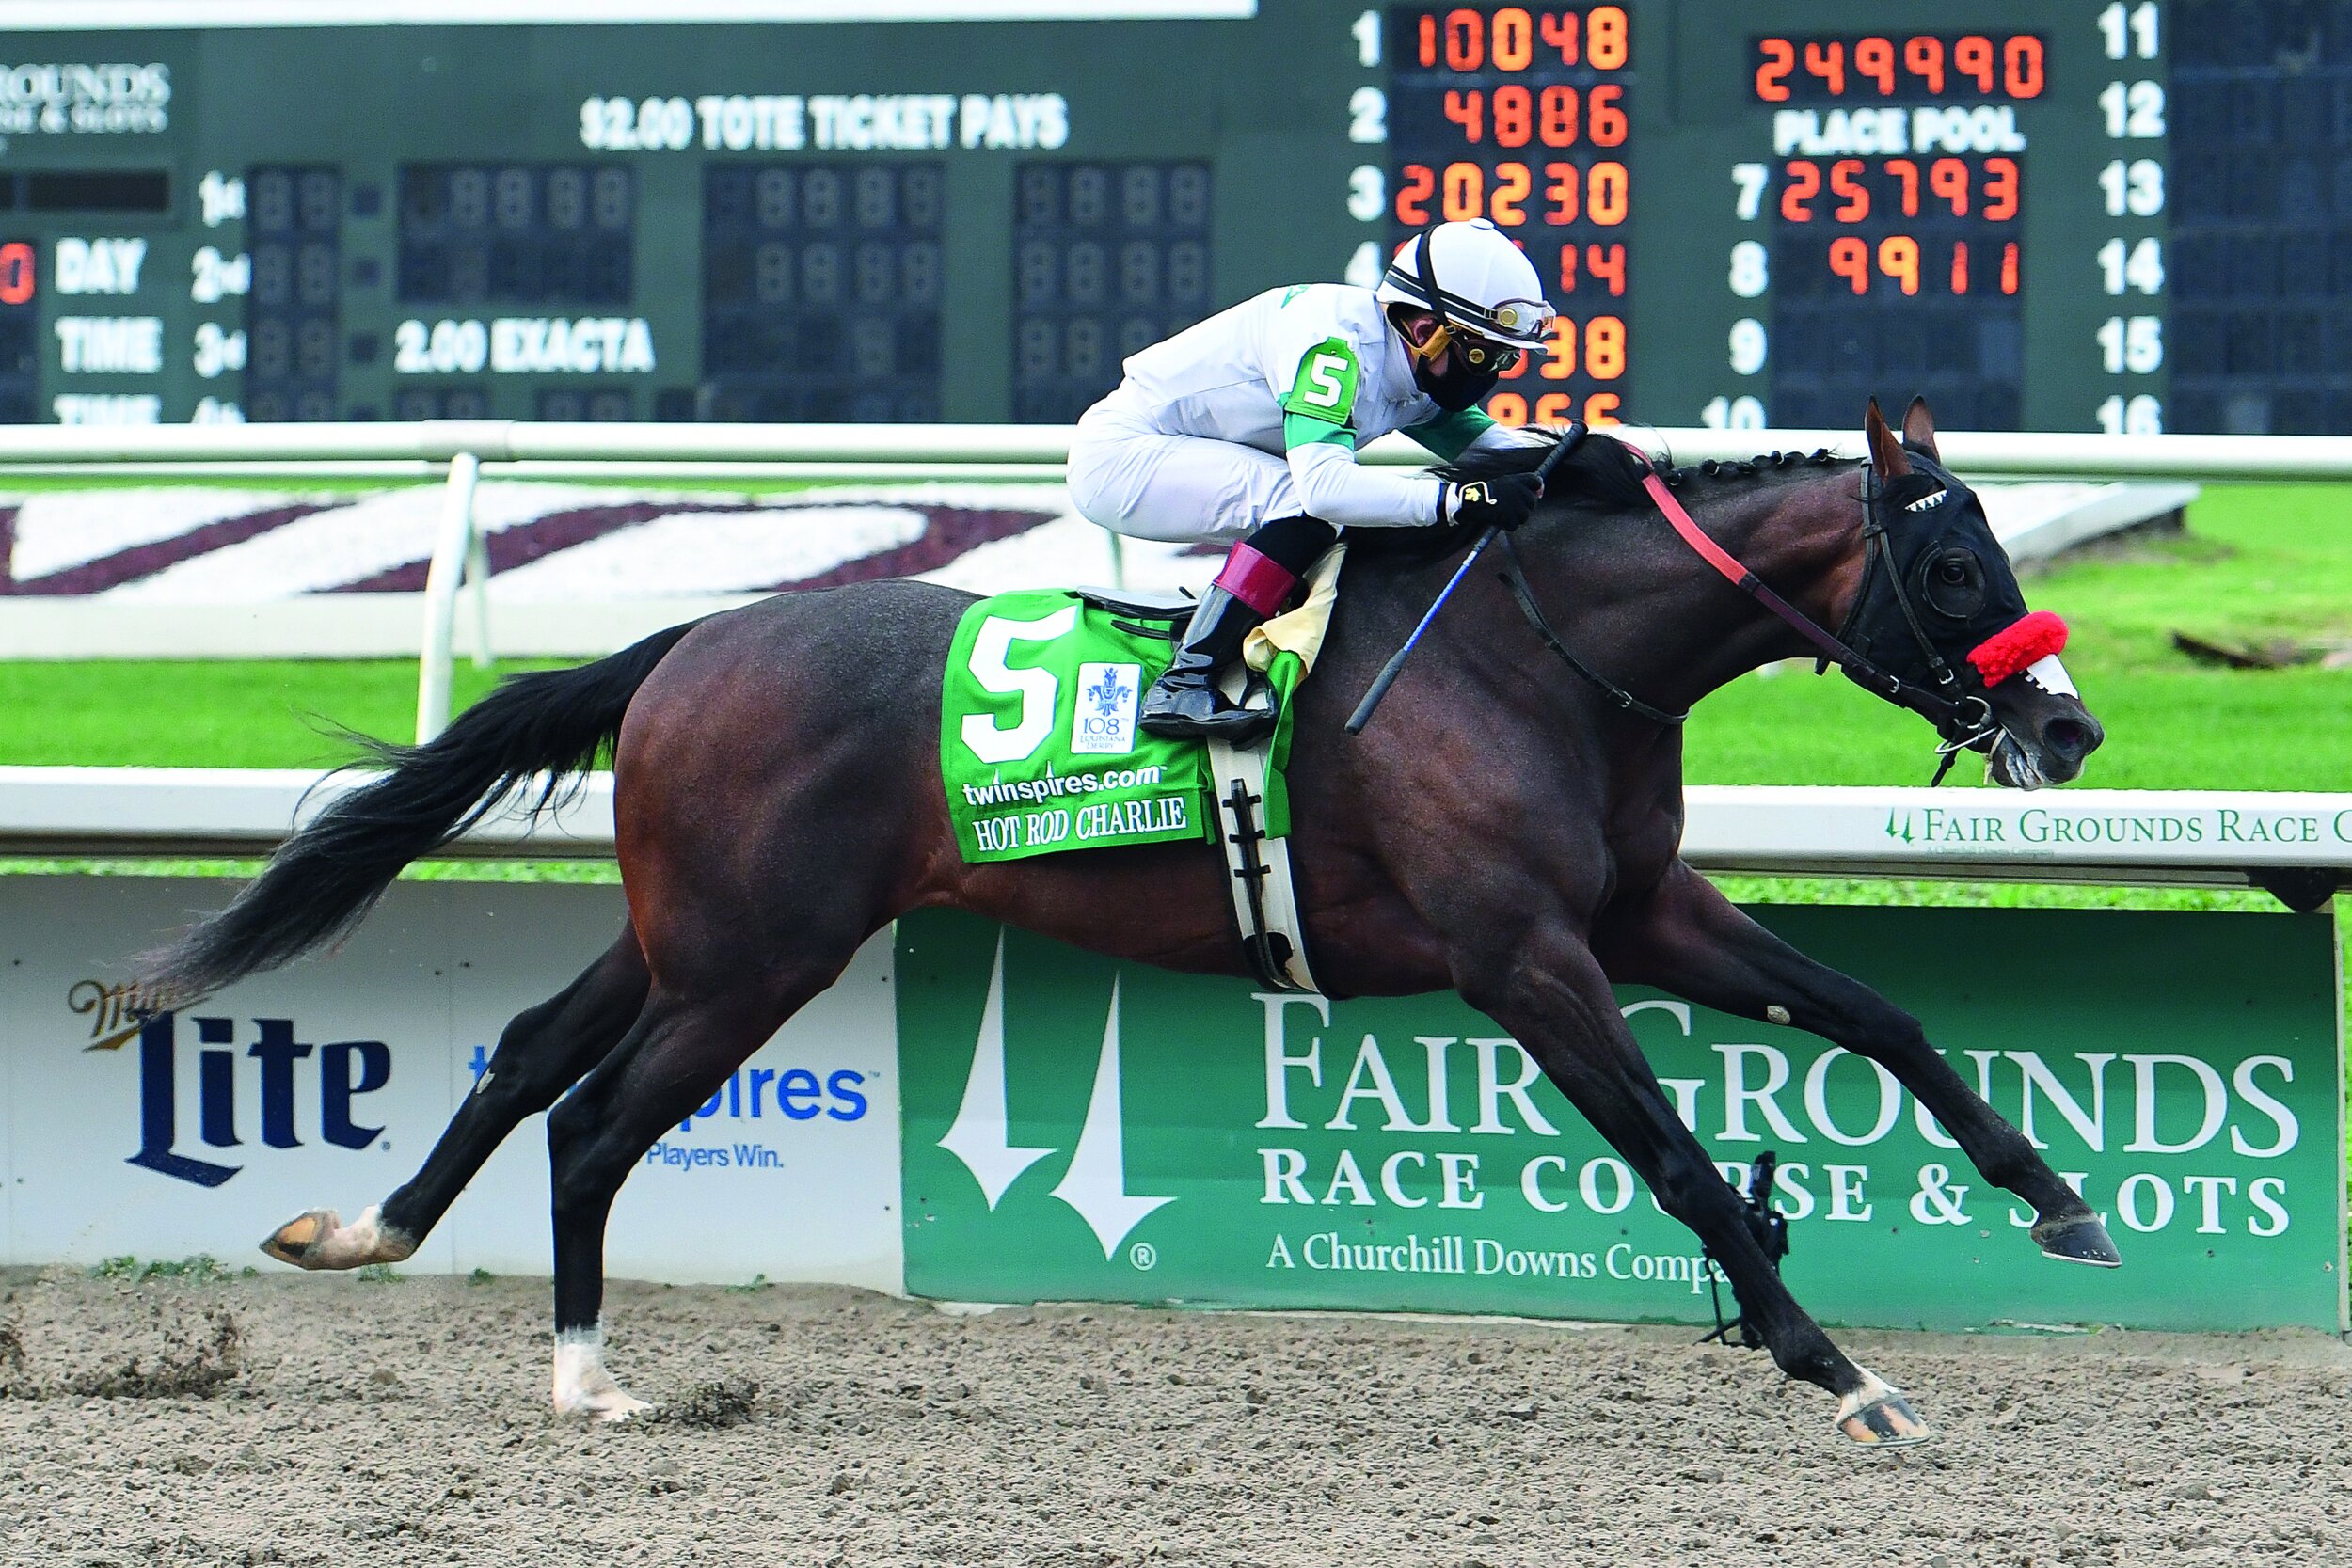 TRIPLE CROWN 13 WINNERS Thoroughbred Horse Racing OFFICIAL Legal Tender $2 Bill 